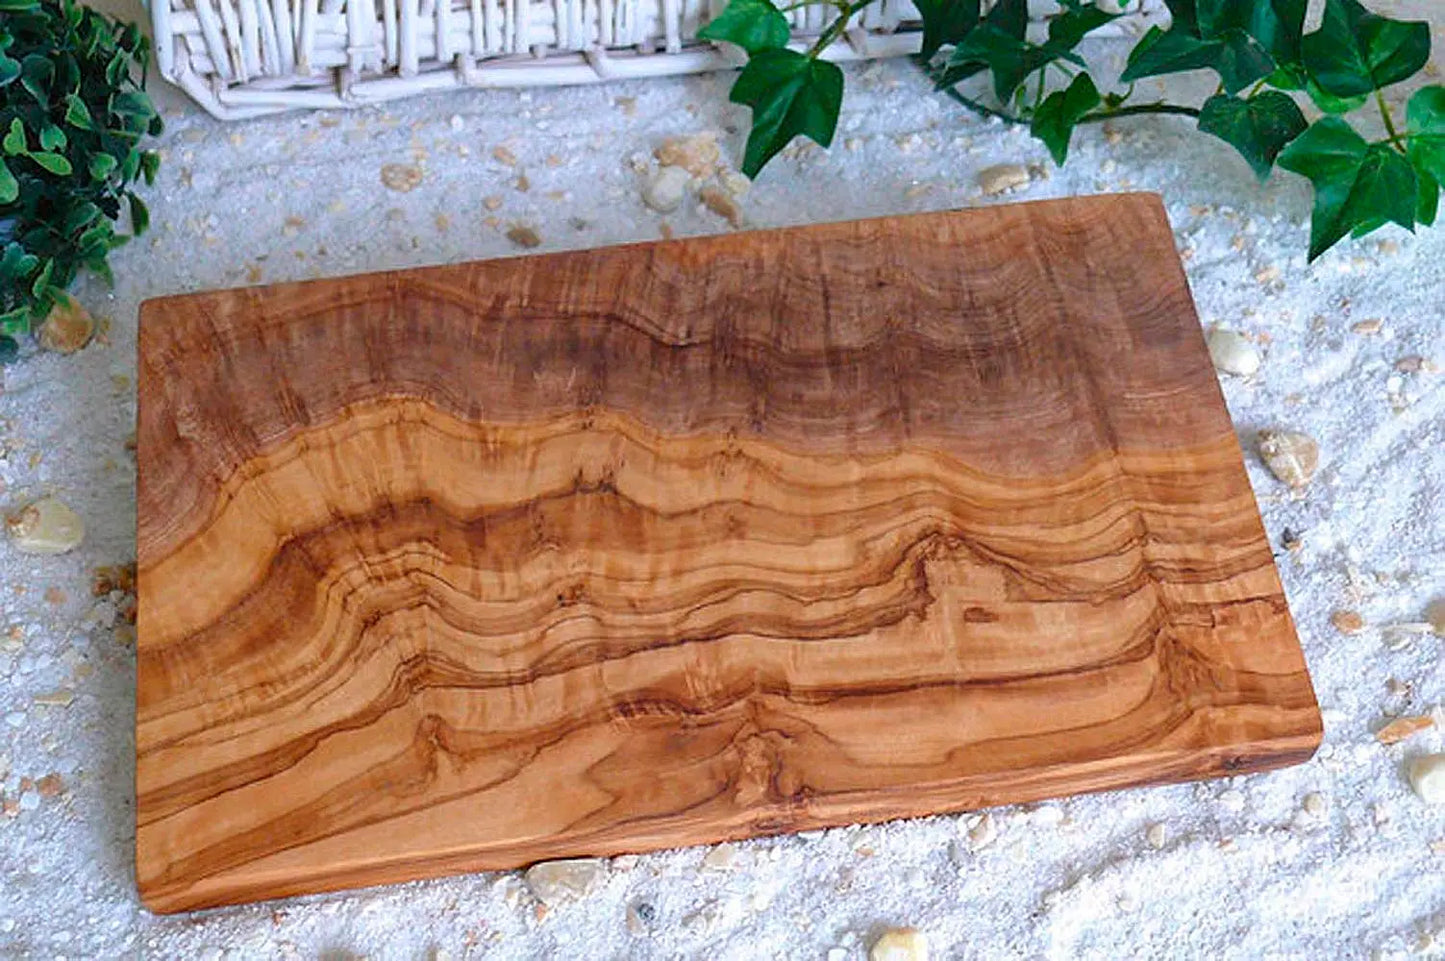 Olive wood smoking board